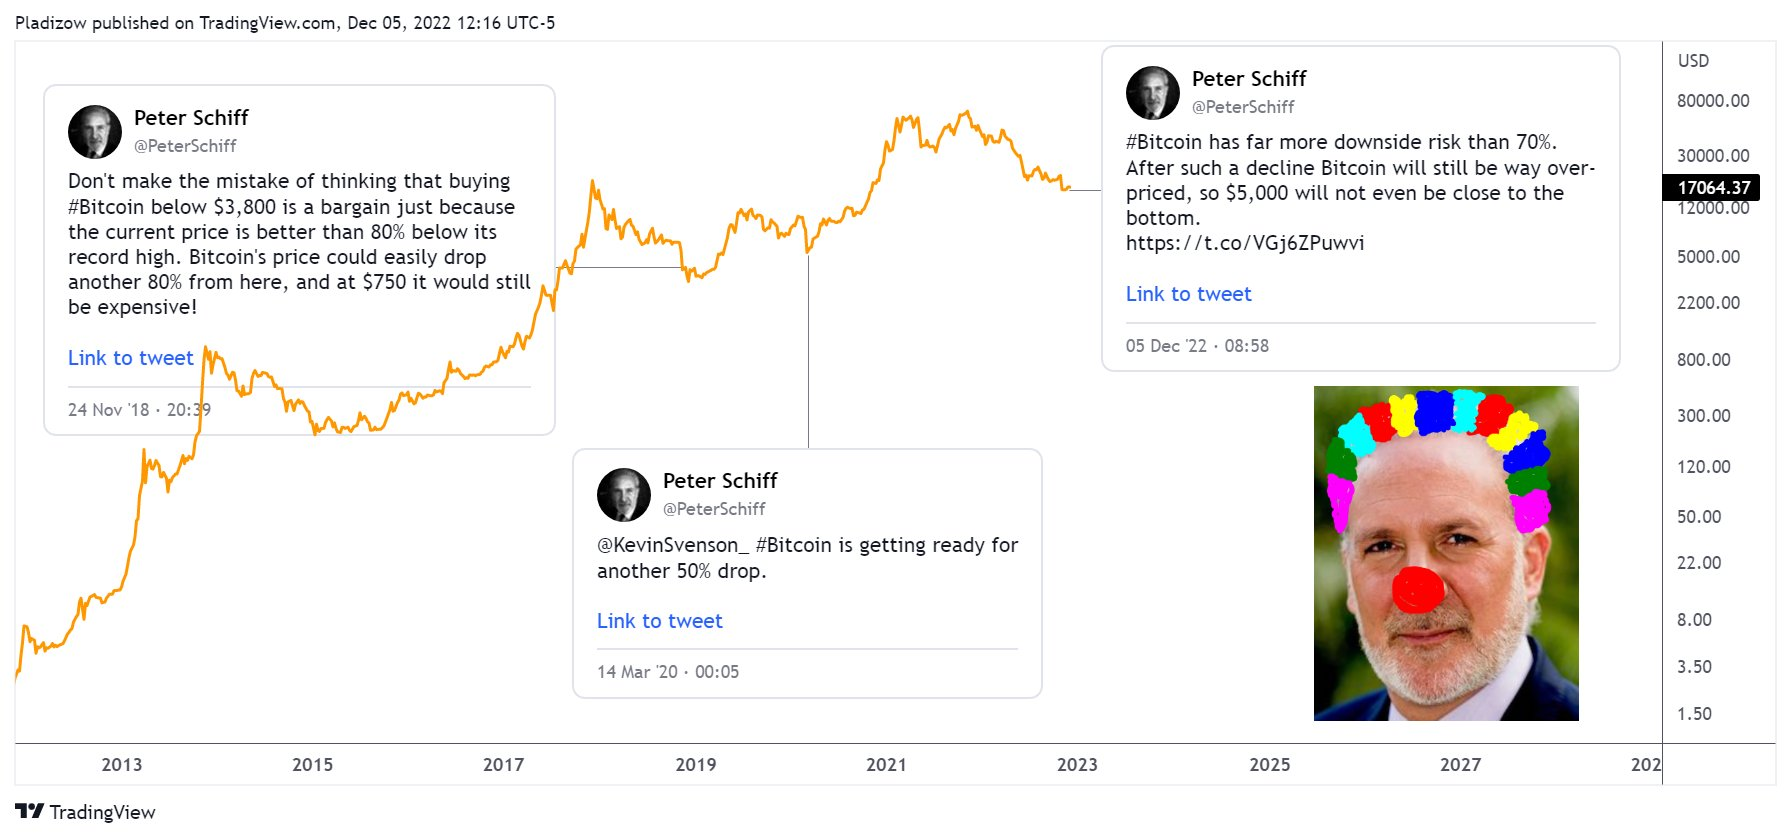 Nunya Bizniz highlighted some of Schiff's horribly wrong BTC predictions